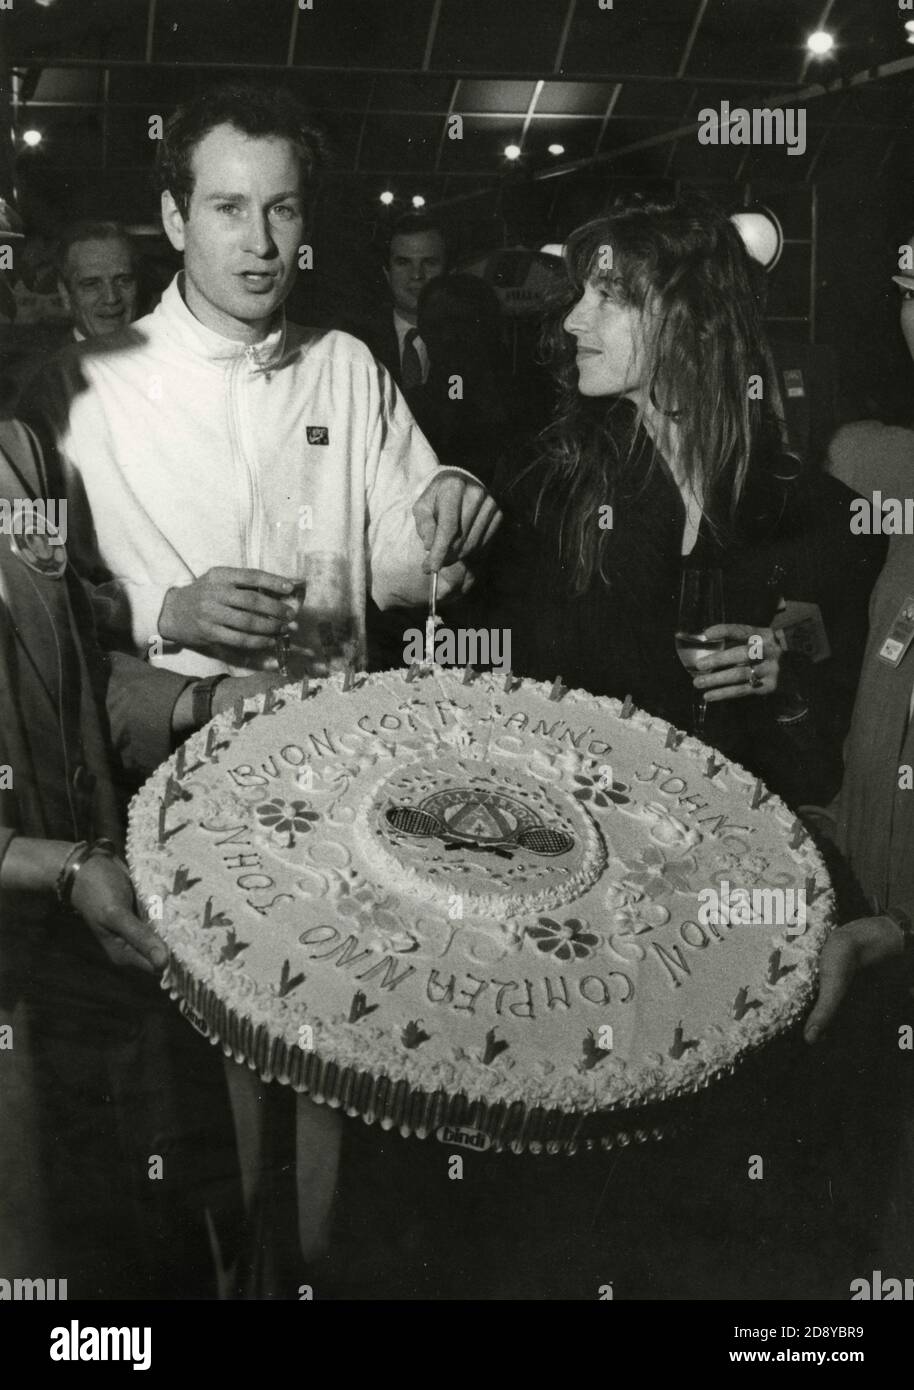 American tennis player John McEnroe and wife Tatum O'Neal with his birthday cake, 1980s Stock Photo